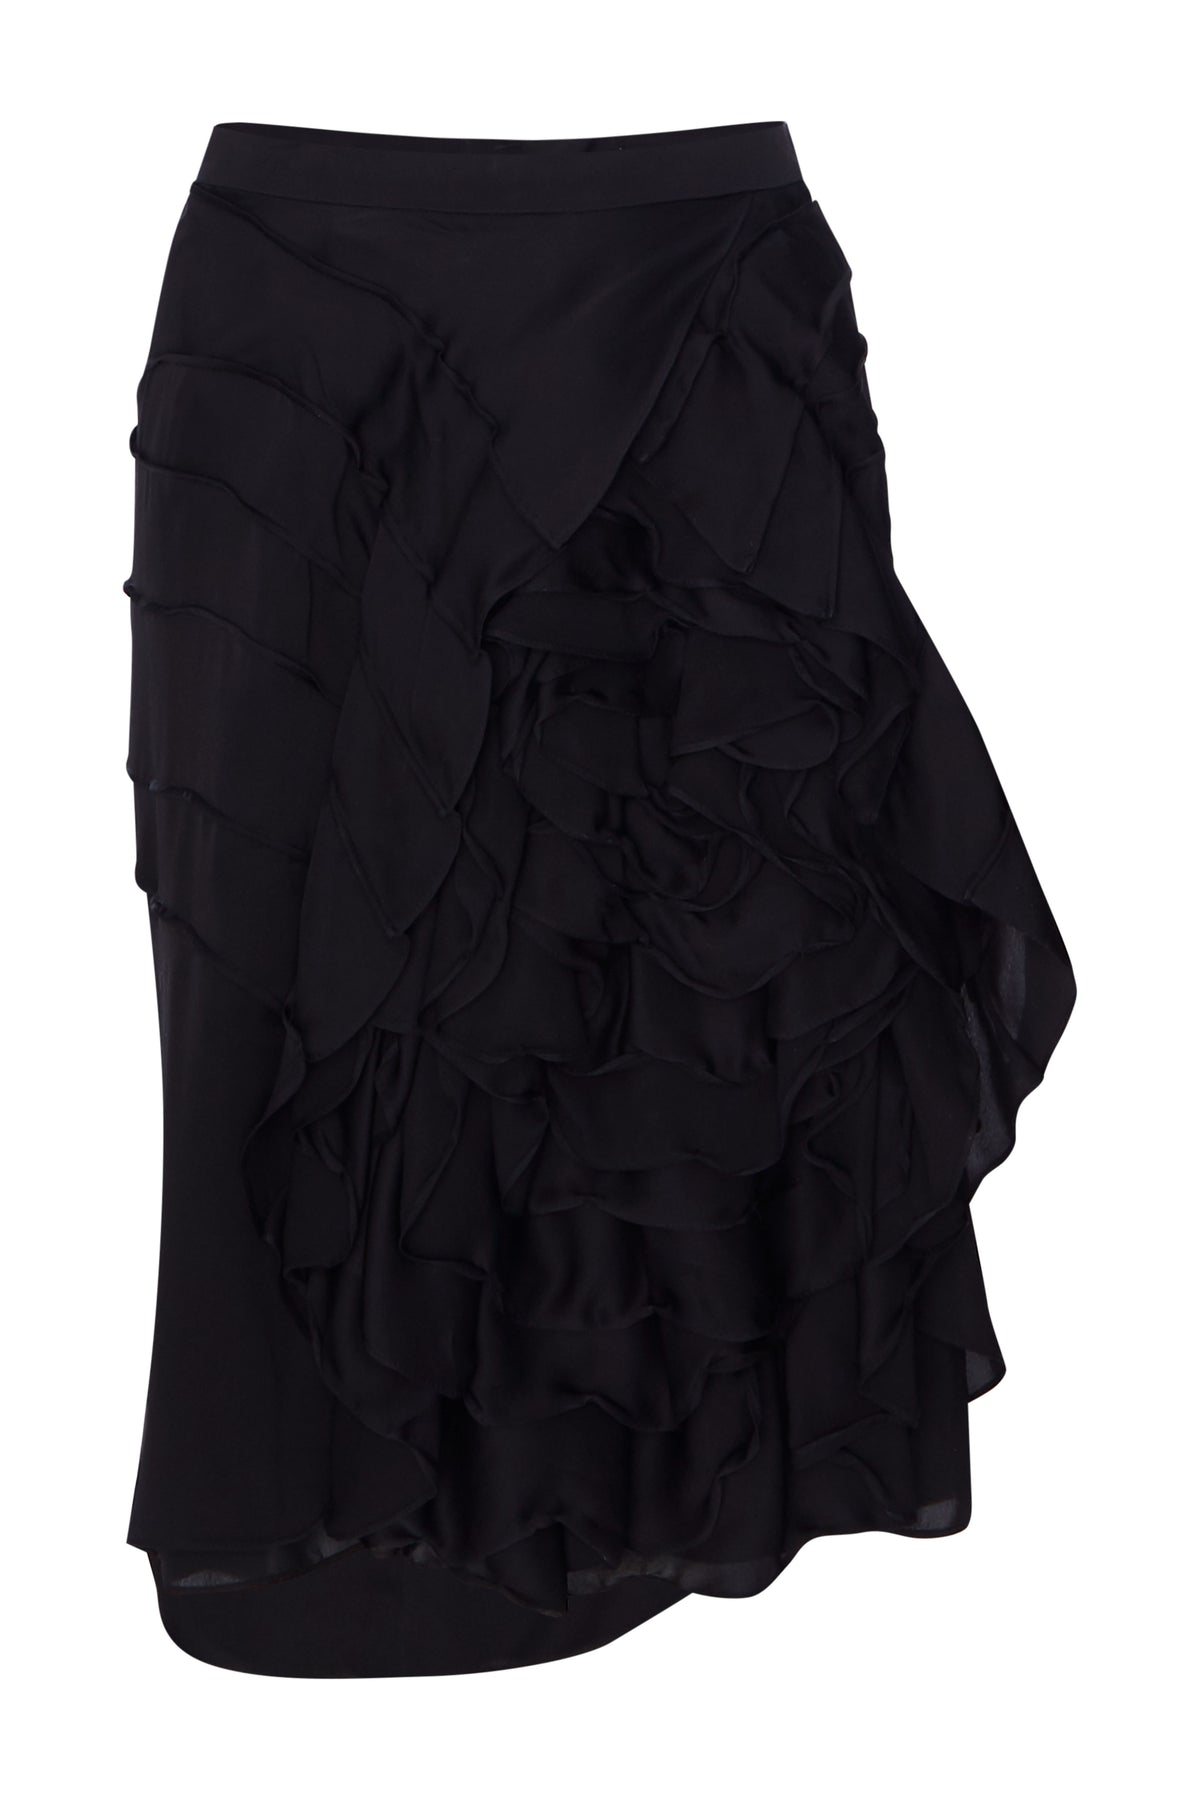 Yves Saint Laurent Black Ruched Skirt - Annie's Ibiza